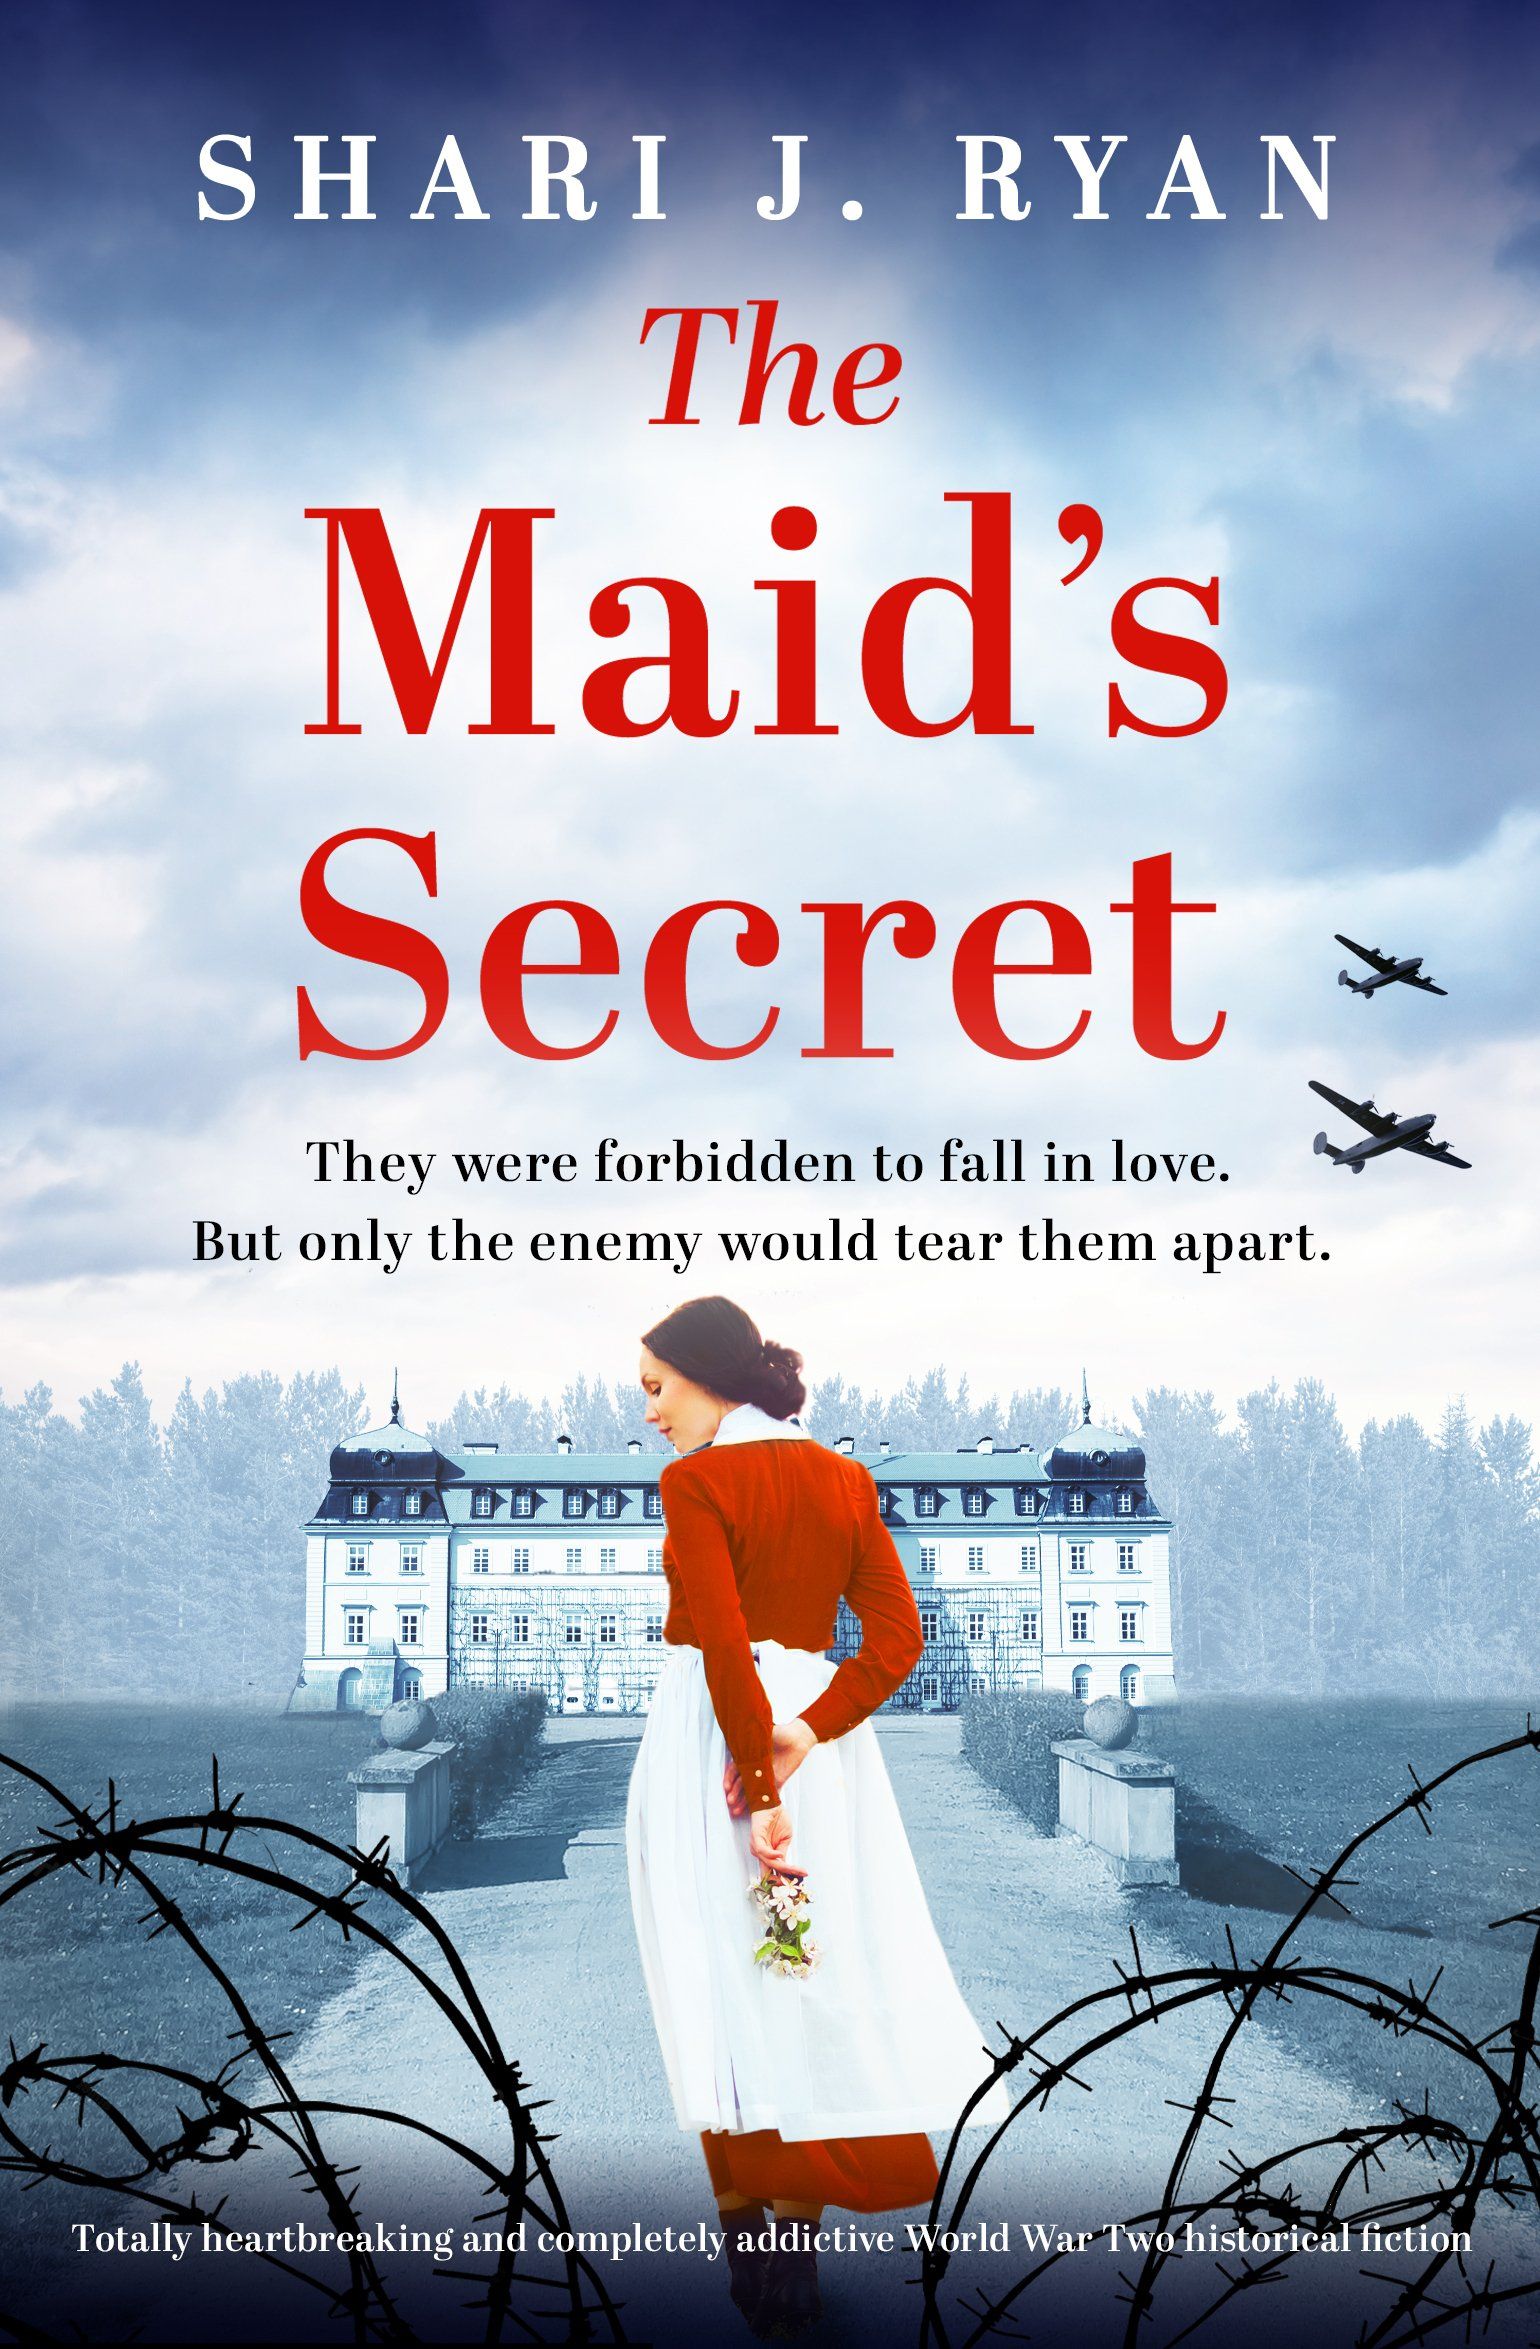 The Maid's Secret by Shari J. Ryan